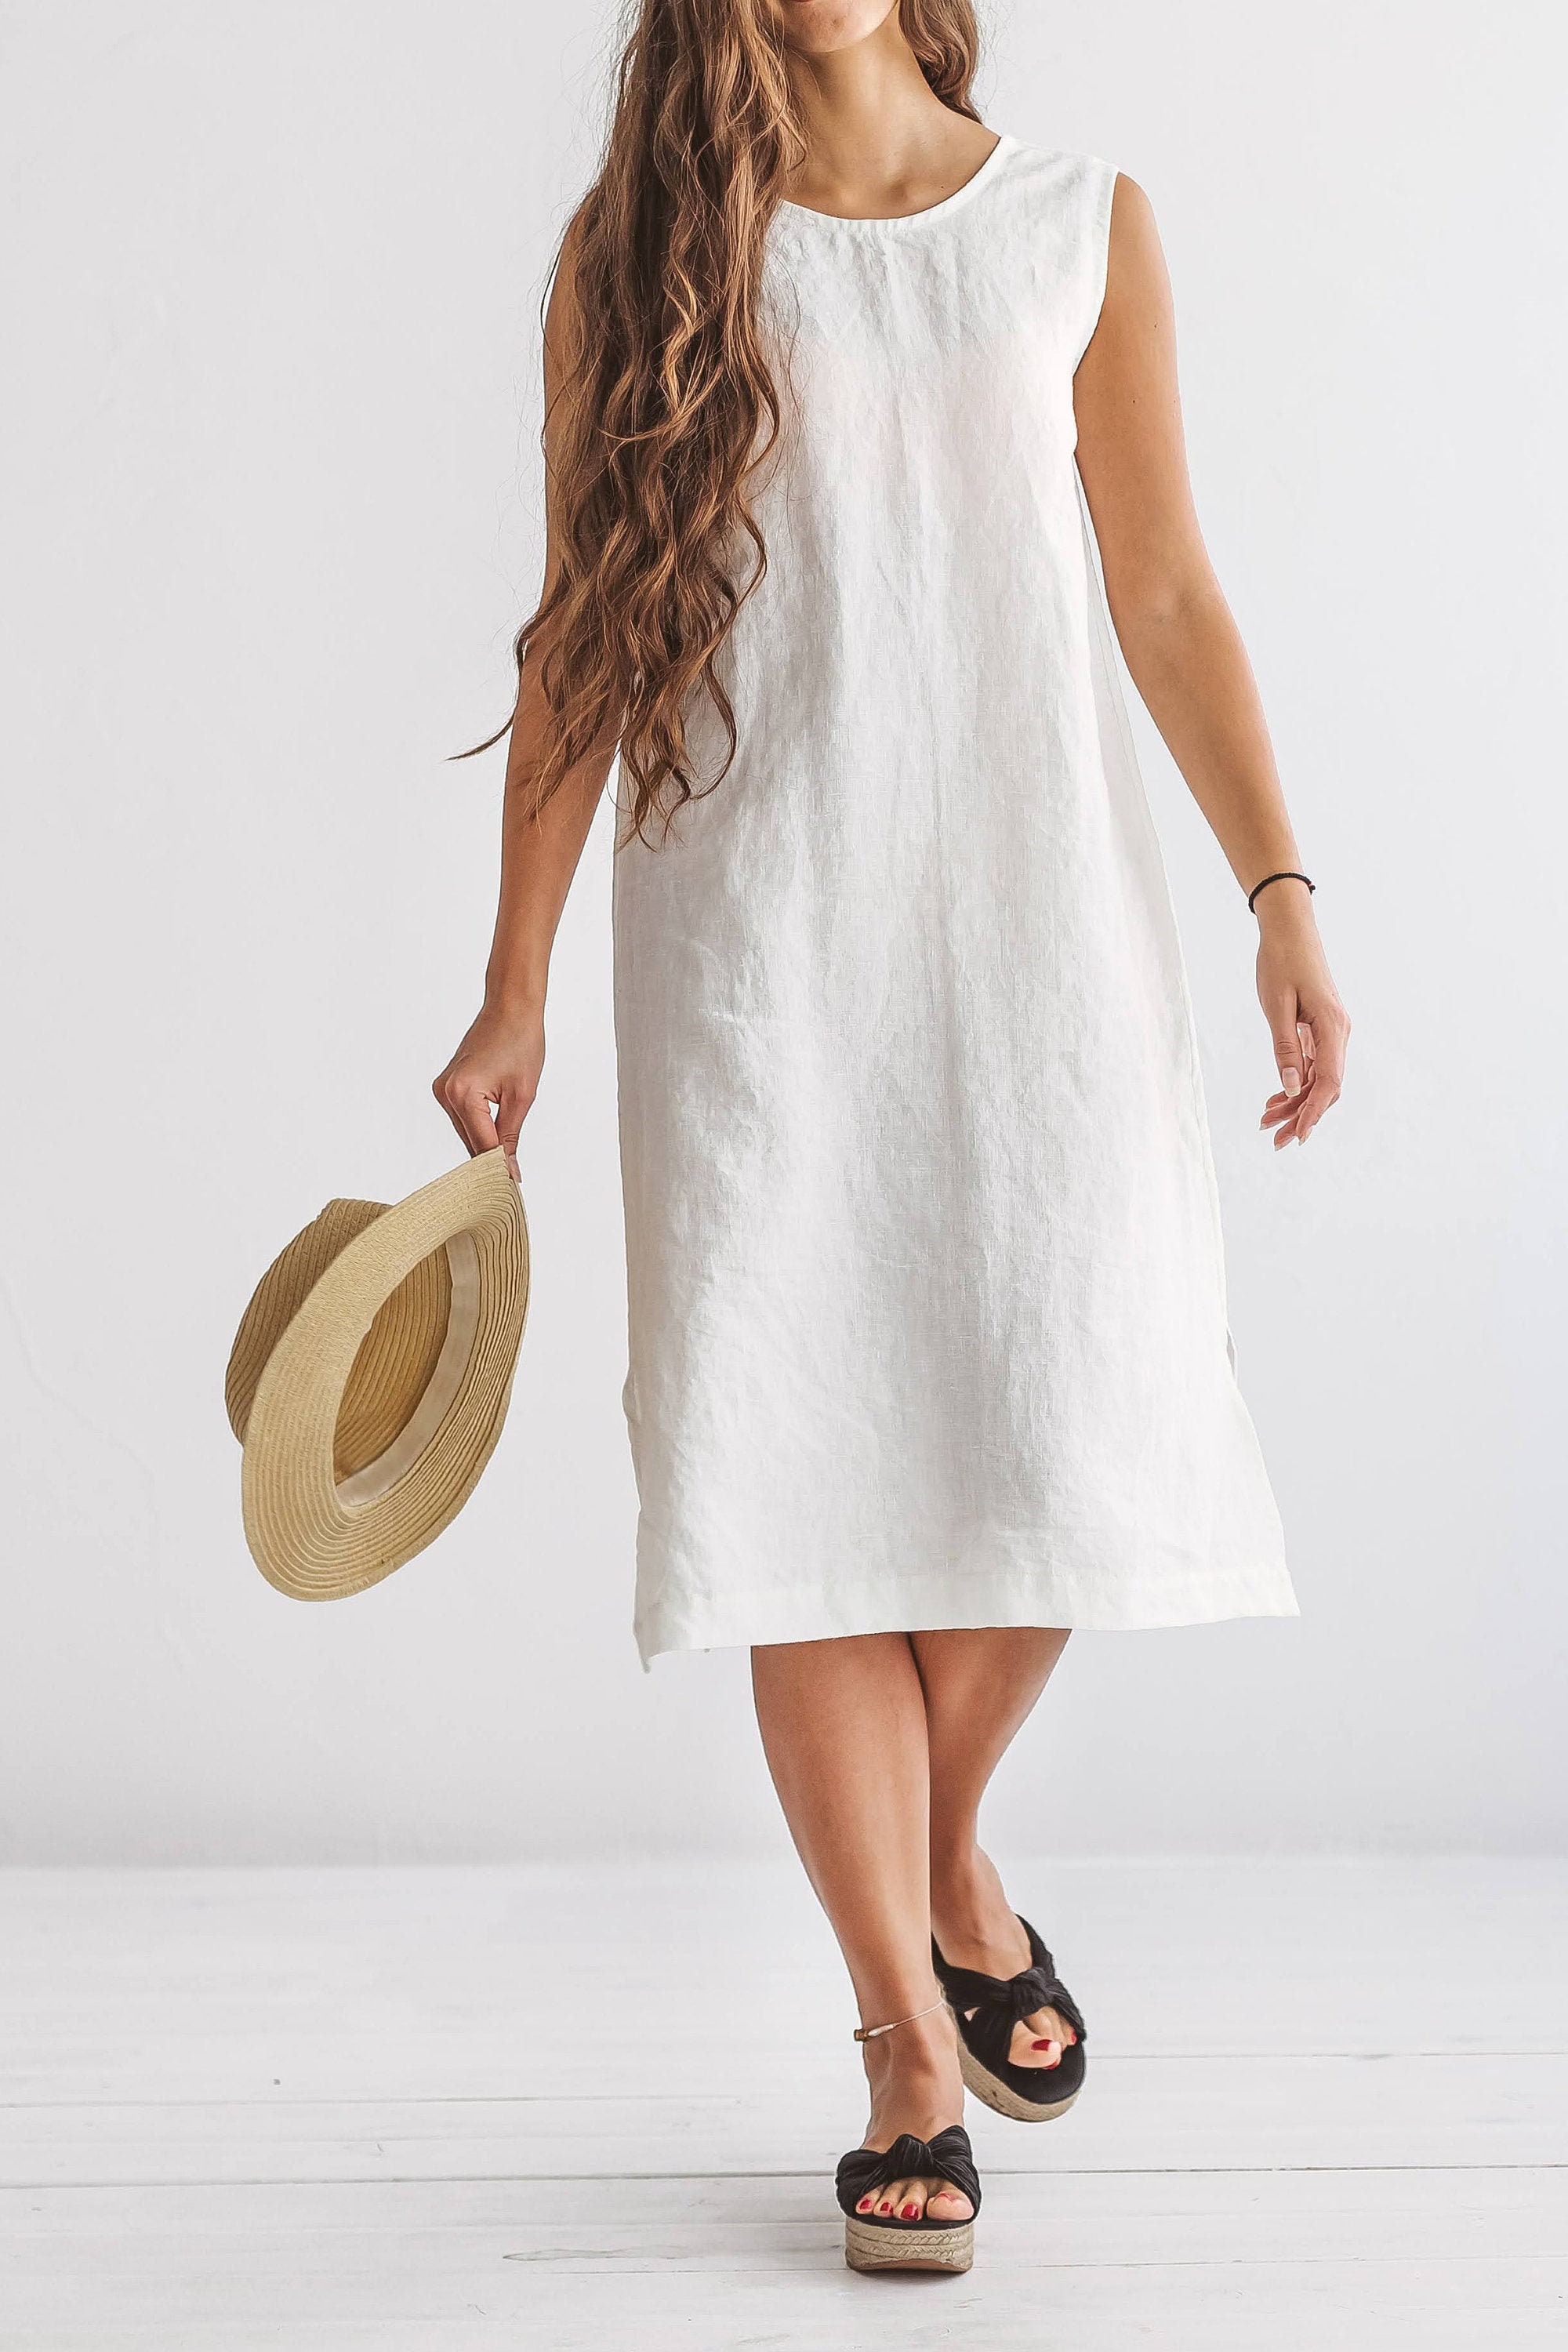 AVERY linen dress midi length summer dress with open back | Etsy